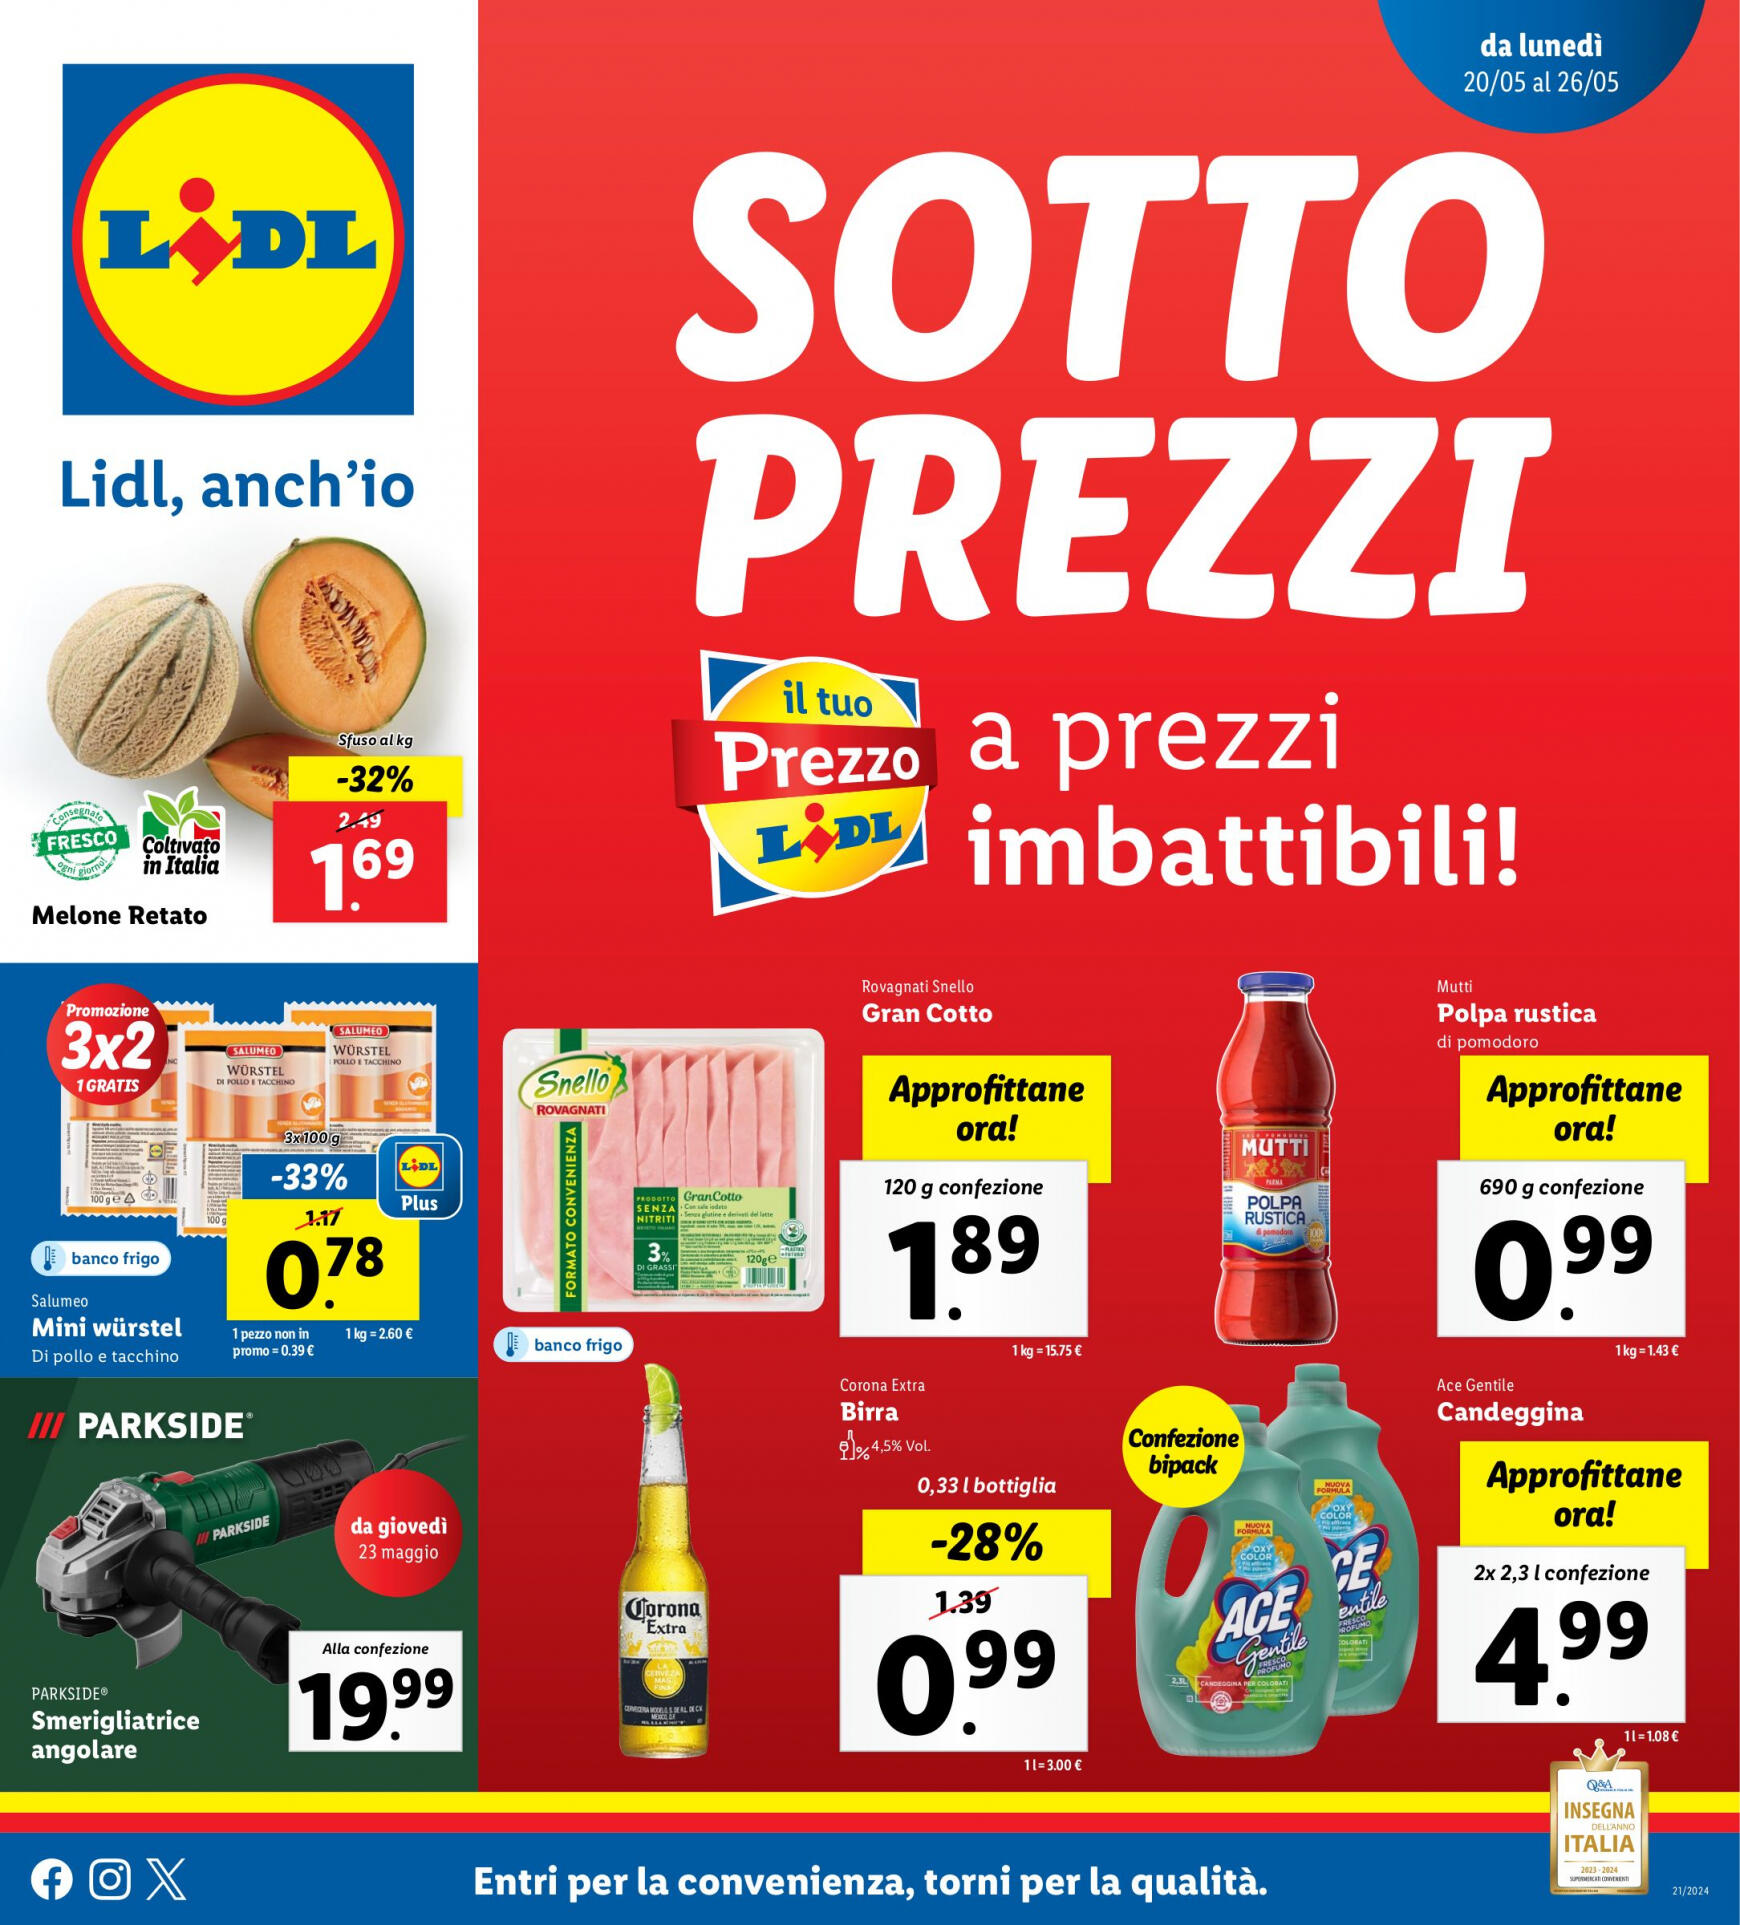 lidl - Nuovo volantino Lidl 20.05. - 26.05. - page: 1